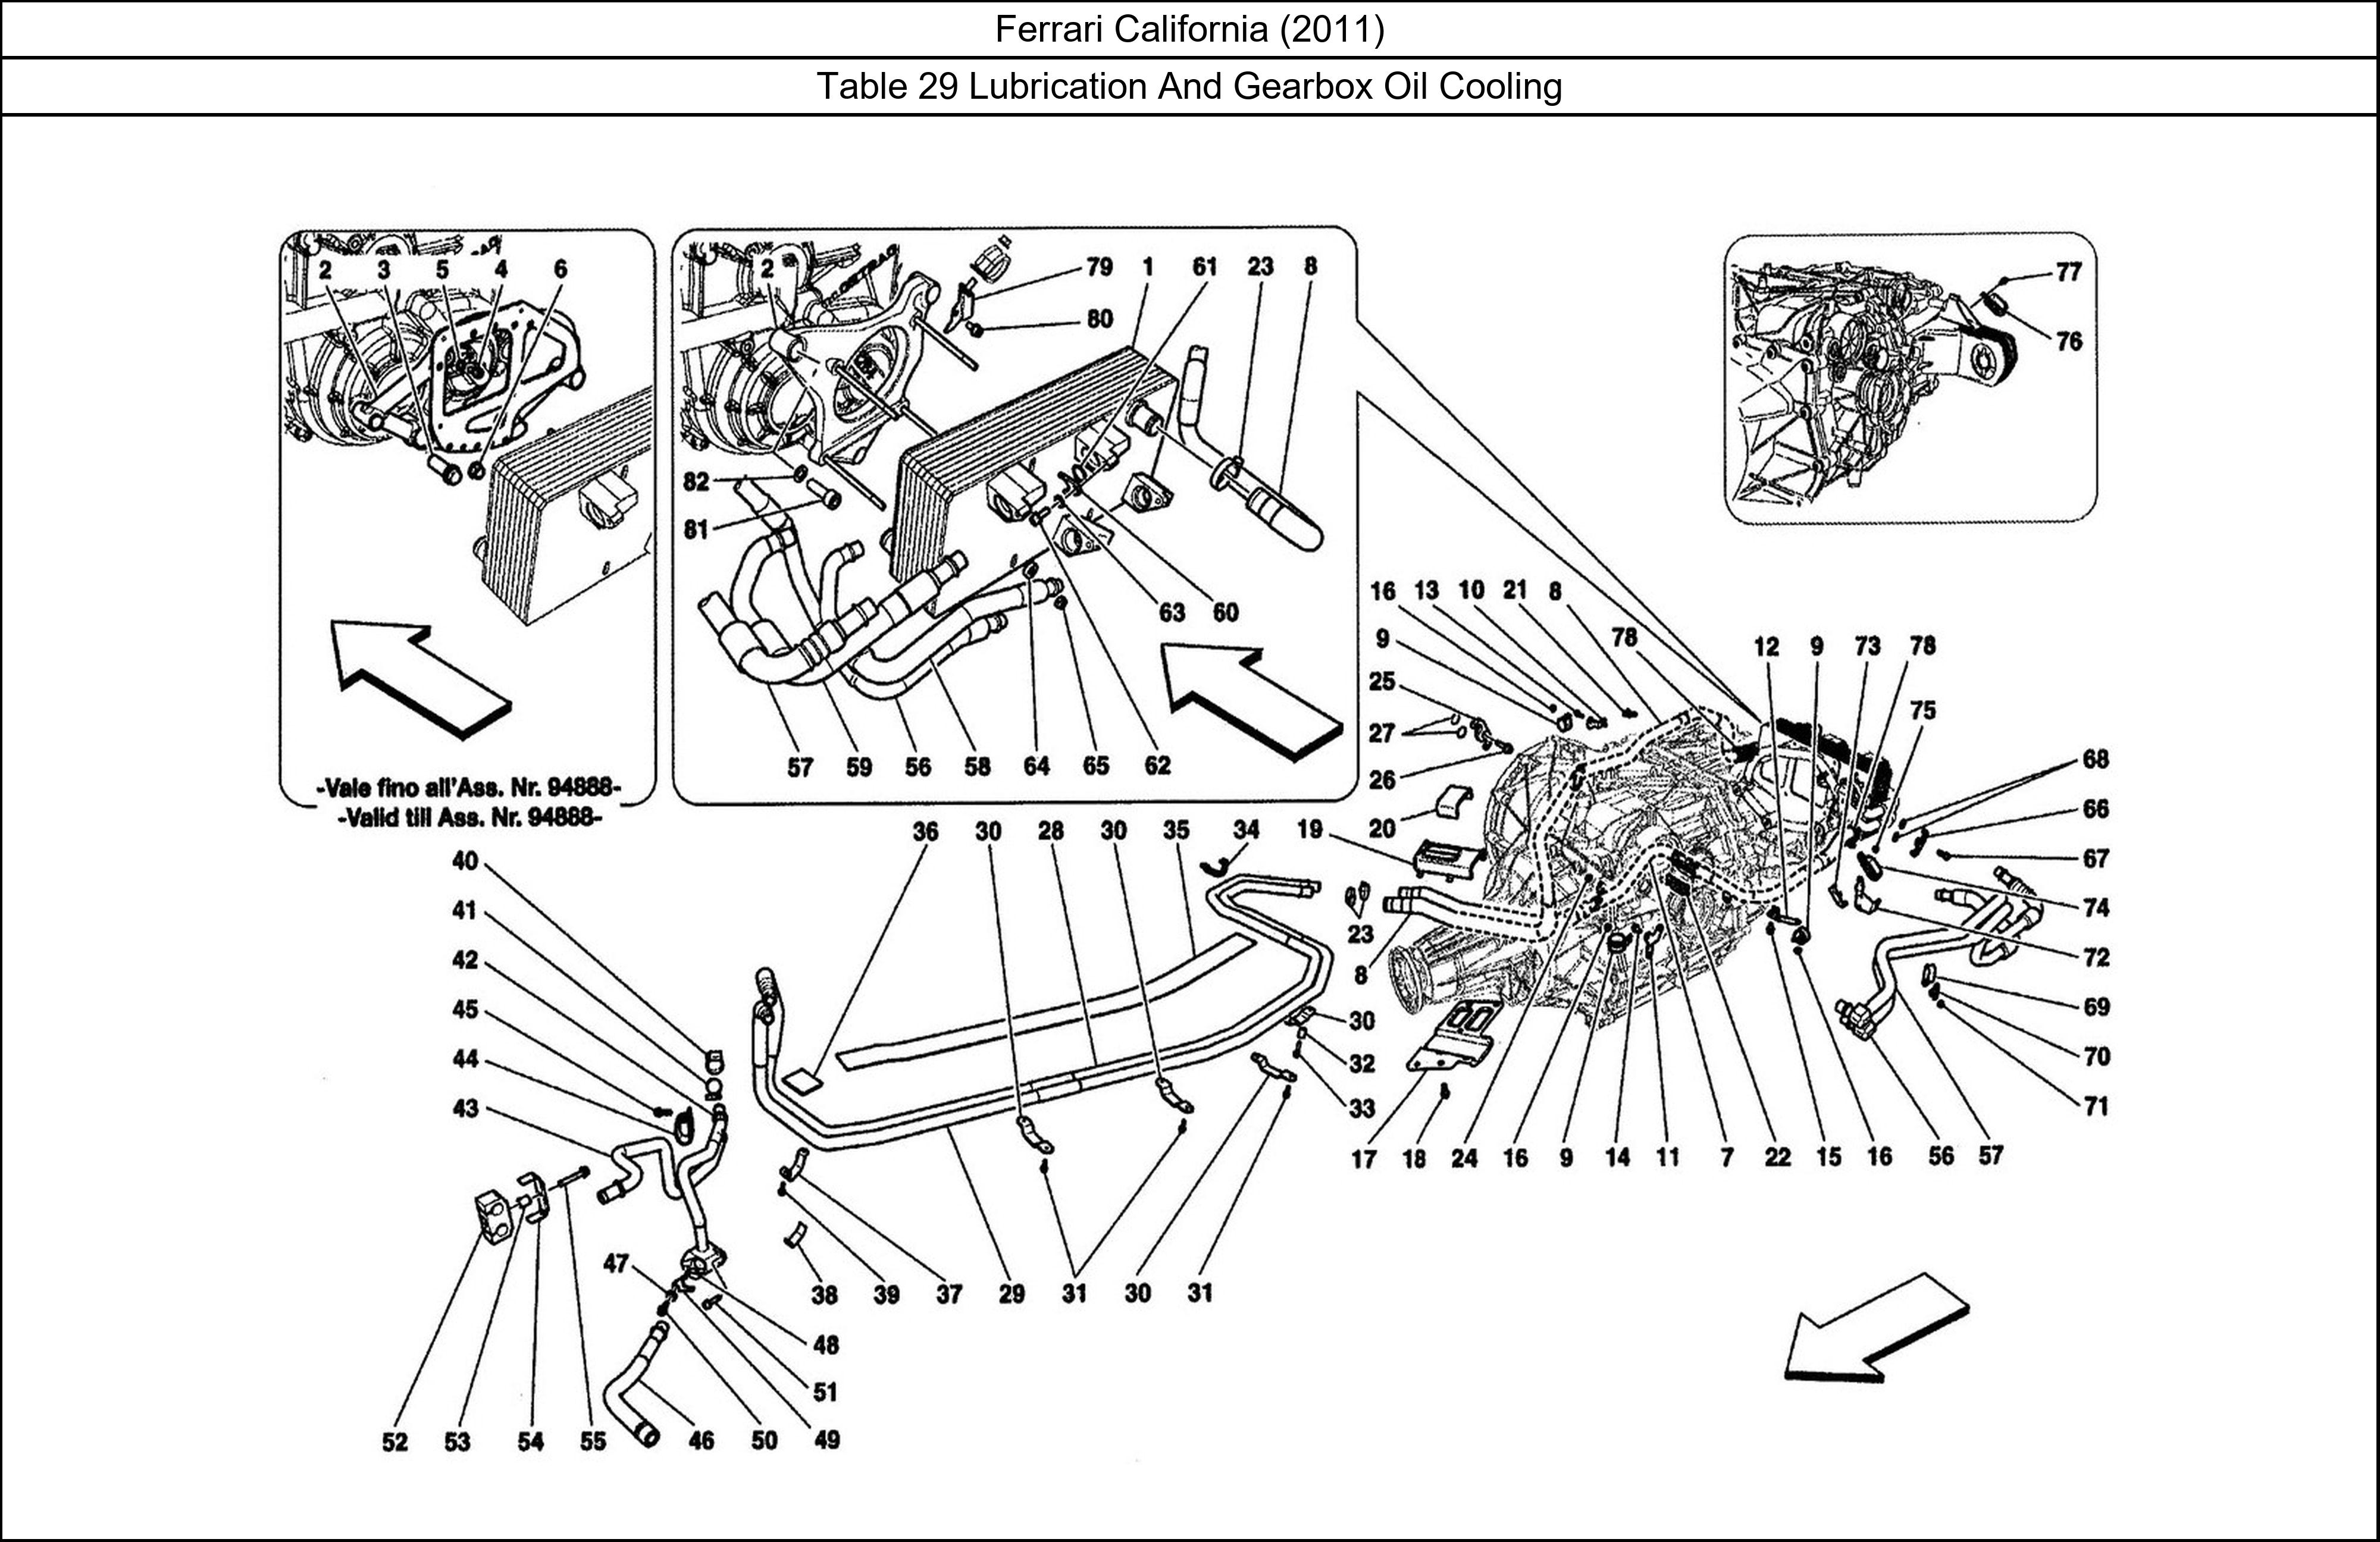 Ferrari Parts Ferrari California (2011) Table 29 Lubrication And Gearbox Oil Cooling